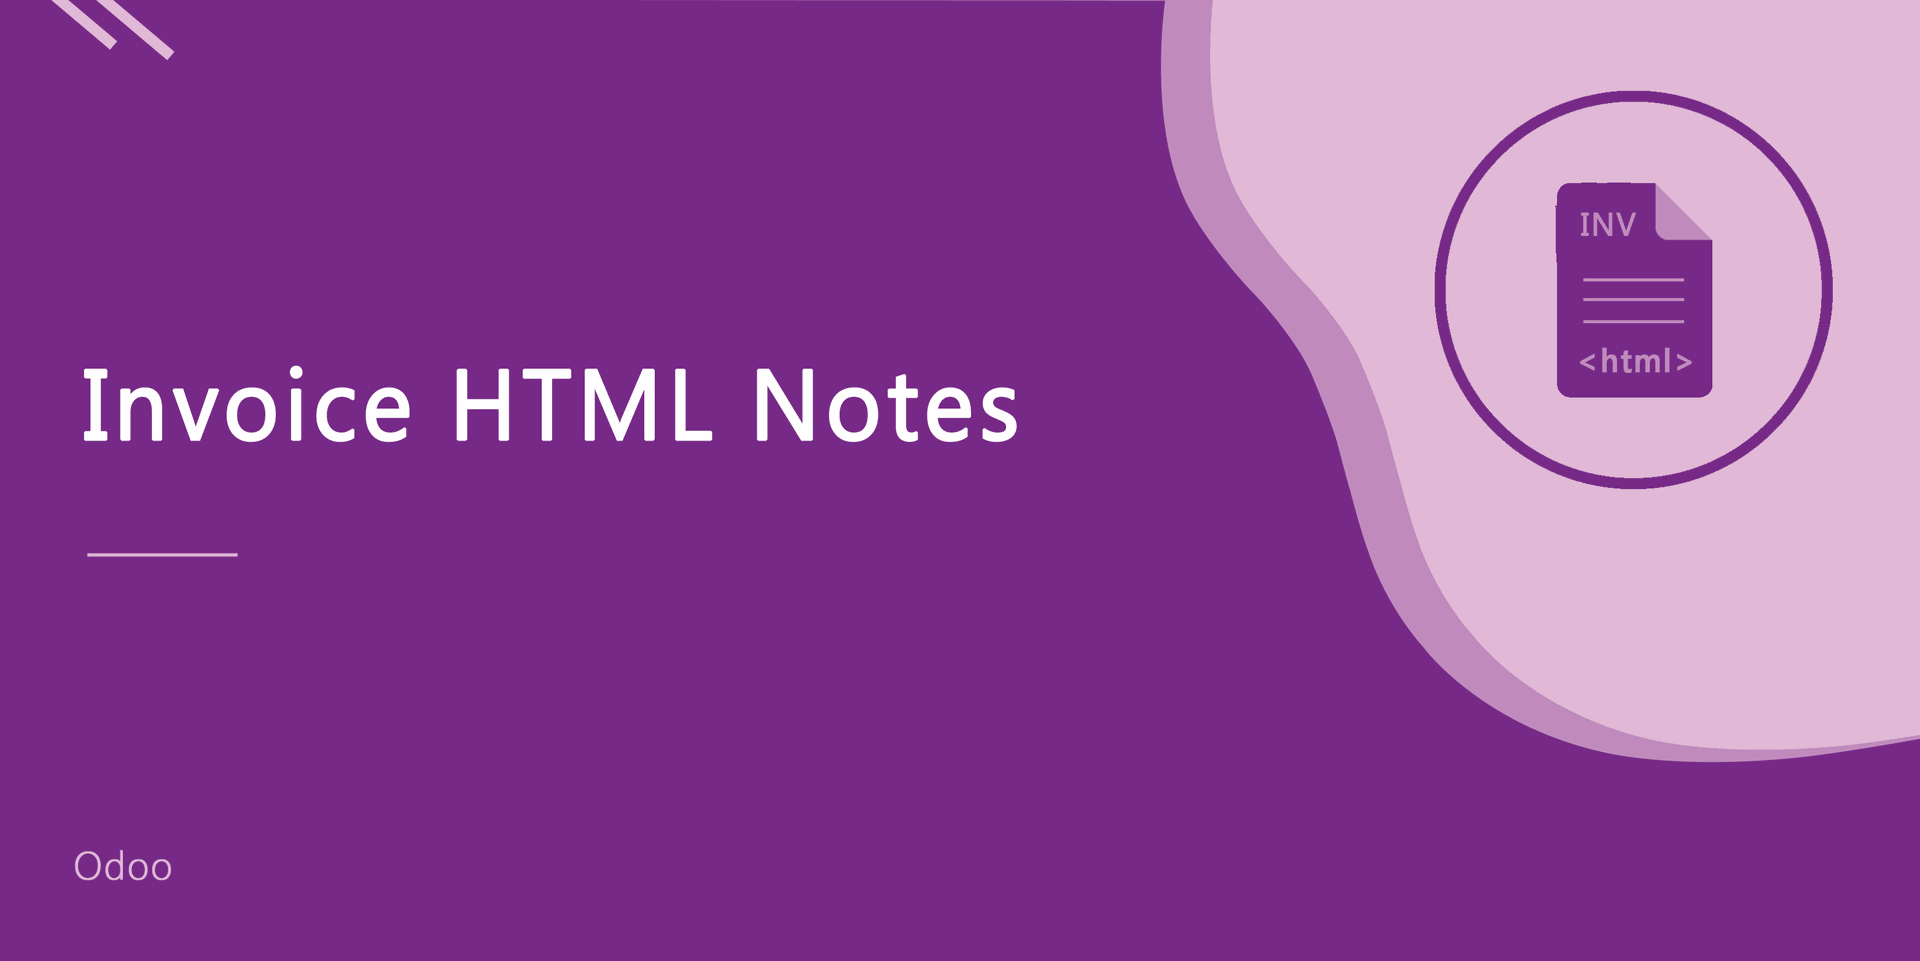 Invoice HTML Notes